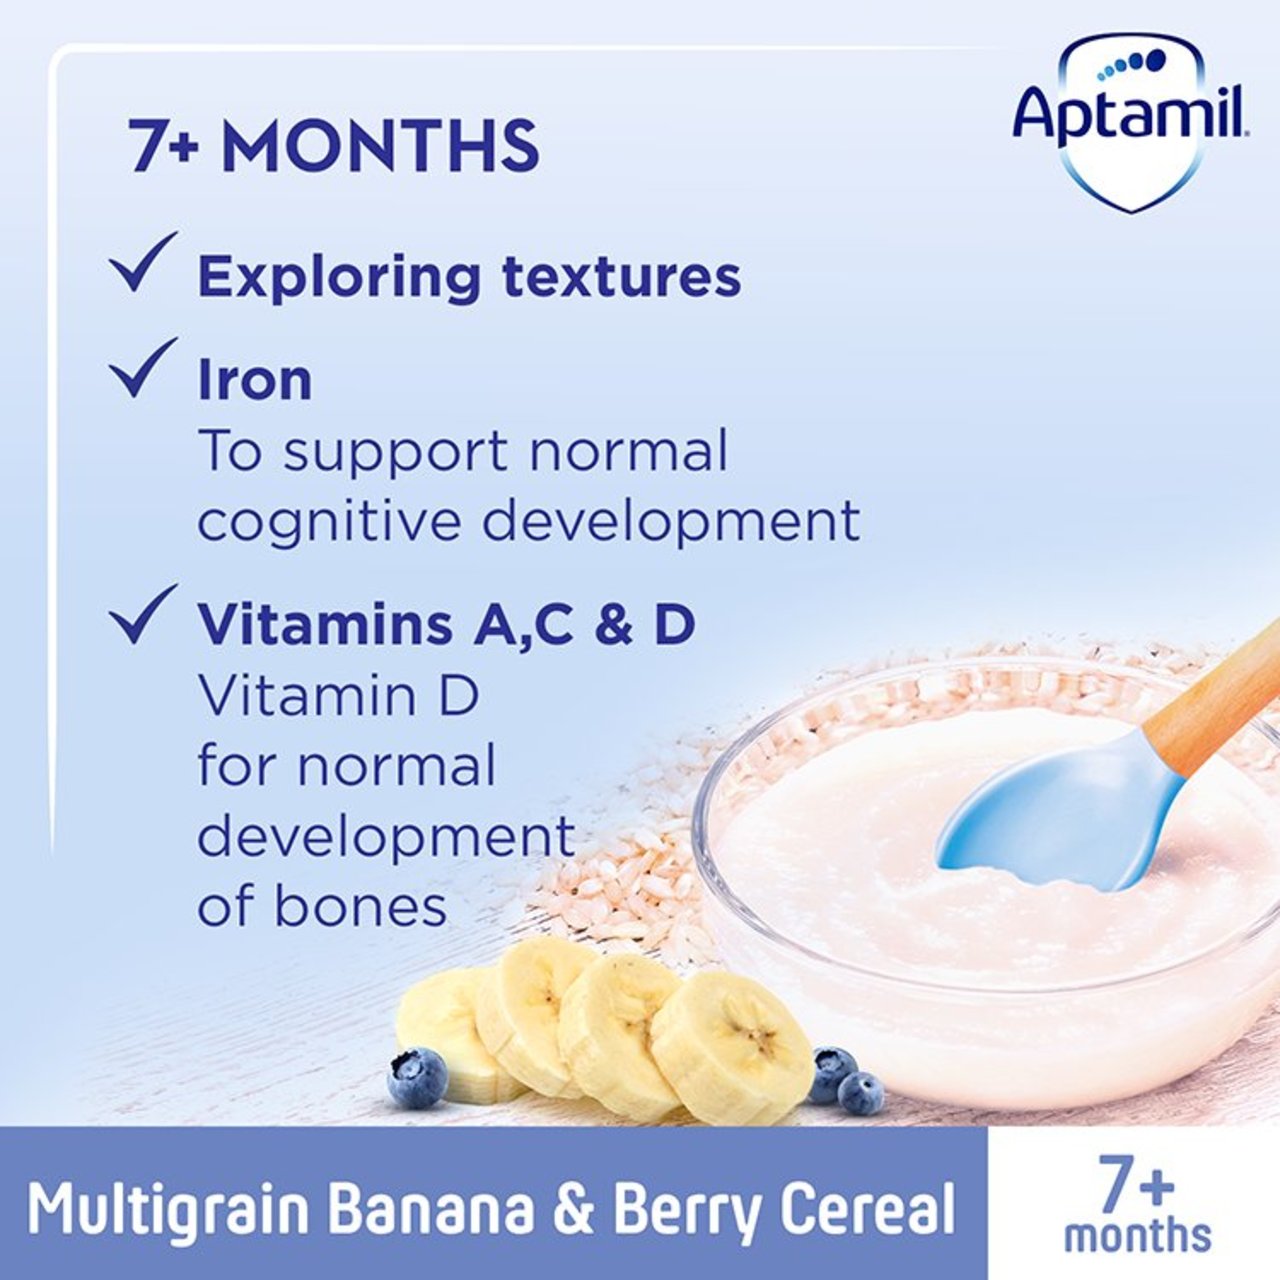 Aptamil Banana & Berry Multigrain Cereal, 7 mths+ 200g